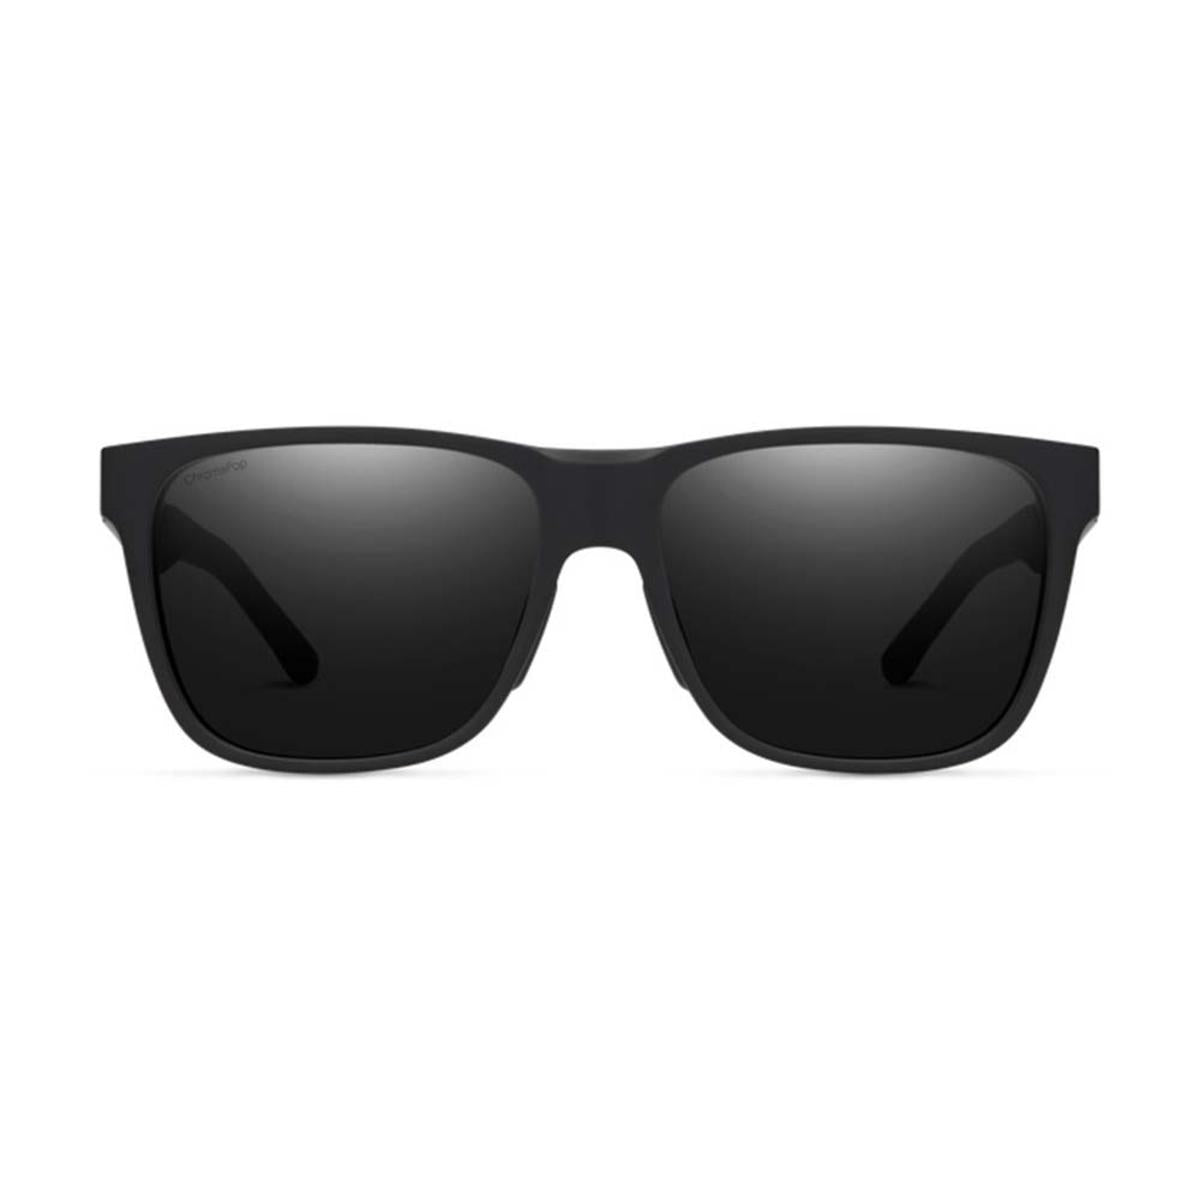 Smith Optics Lowdown Steel Sunglasses ChromaPop Polarized Black - Matte Black Frame